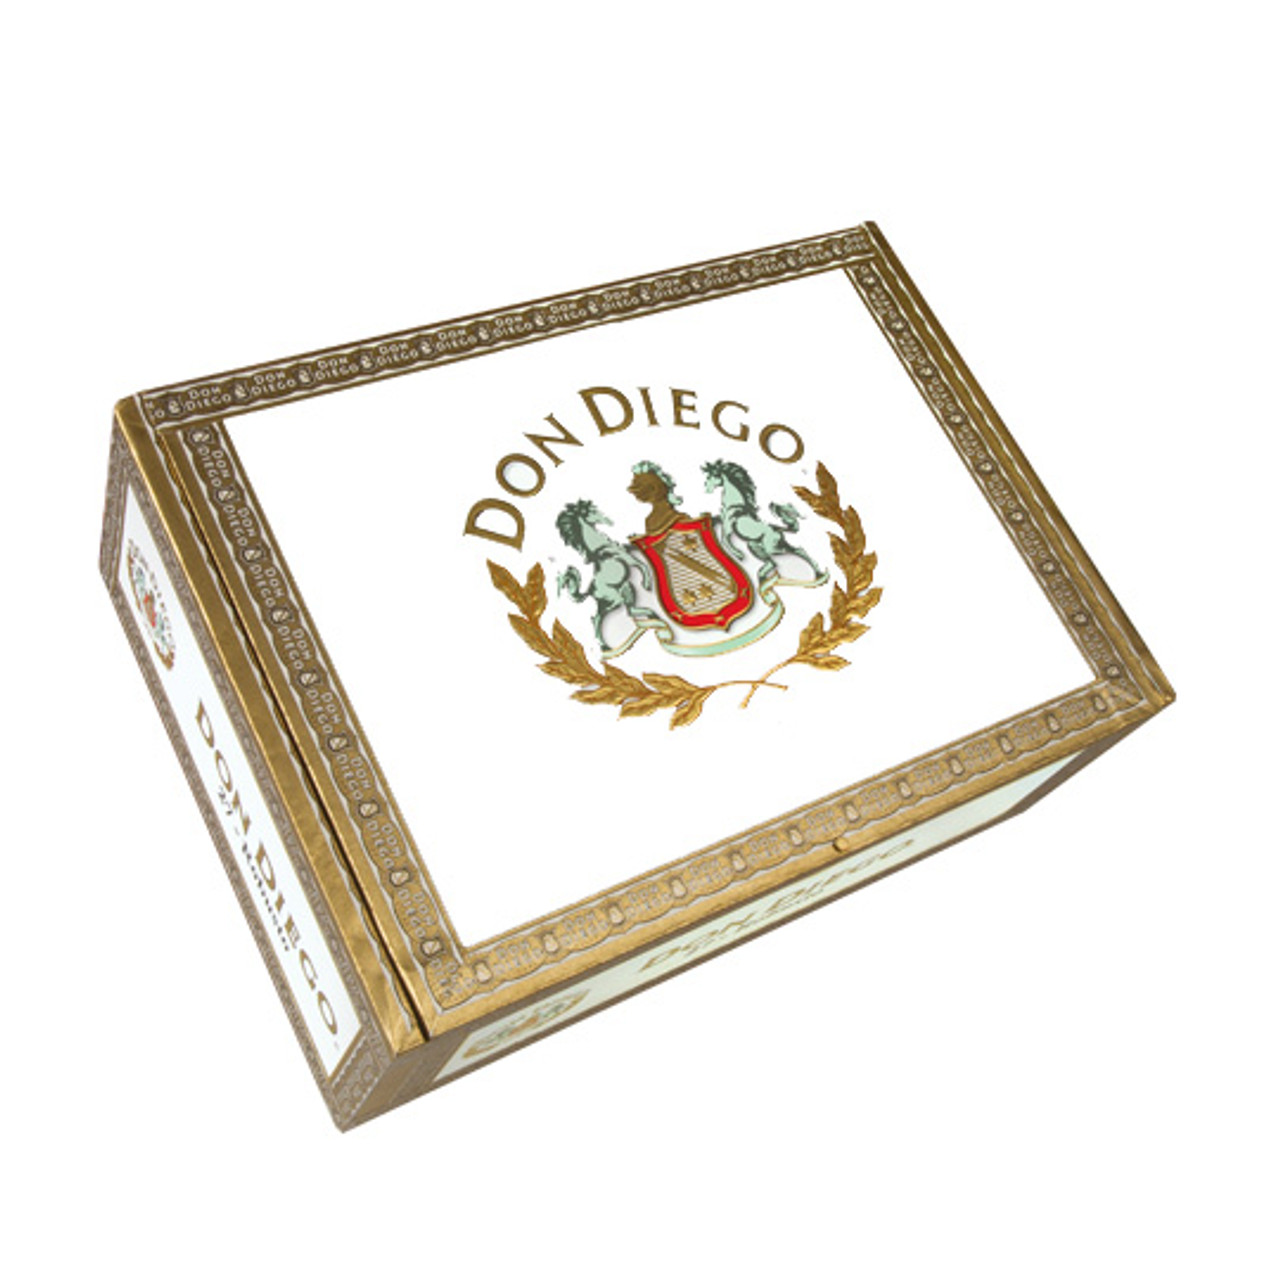 Don Diego Privada No. 1 Cigars - 6.62 x 43 (Box of 25) *Box